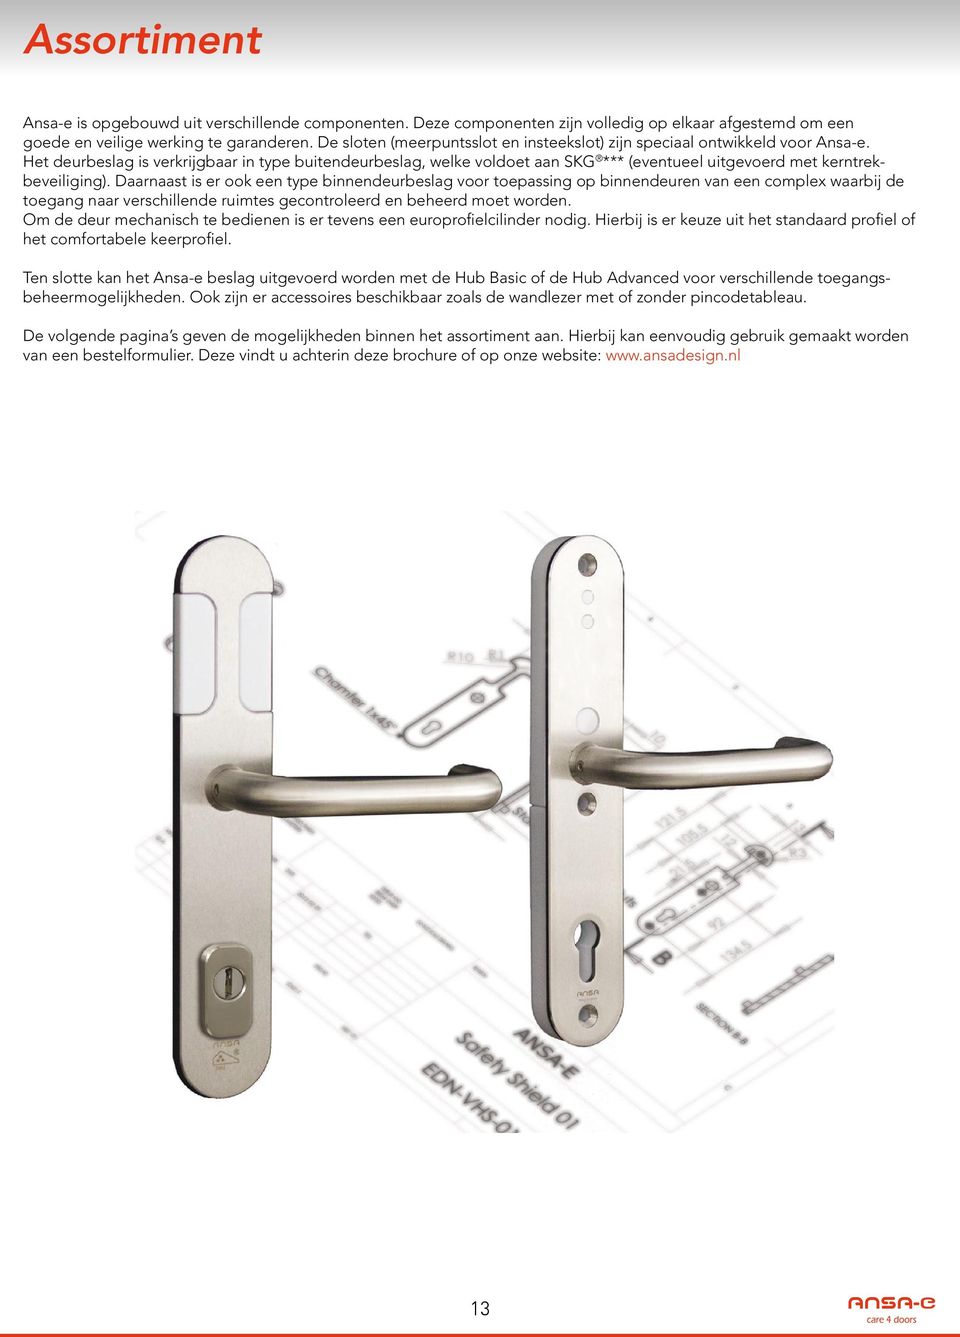 Het deurbeslag is verkrijgbaar in type deurbeslag, welke voldoet aan SKG *** (eventueel uitgevoerd met kerntrekbeveiliging).